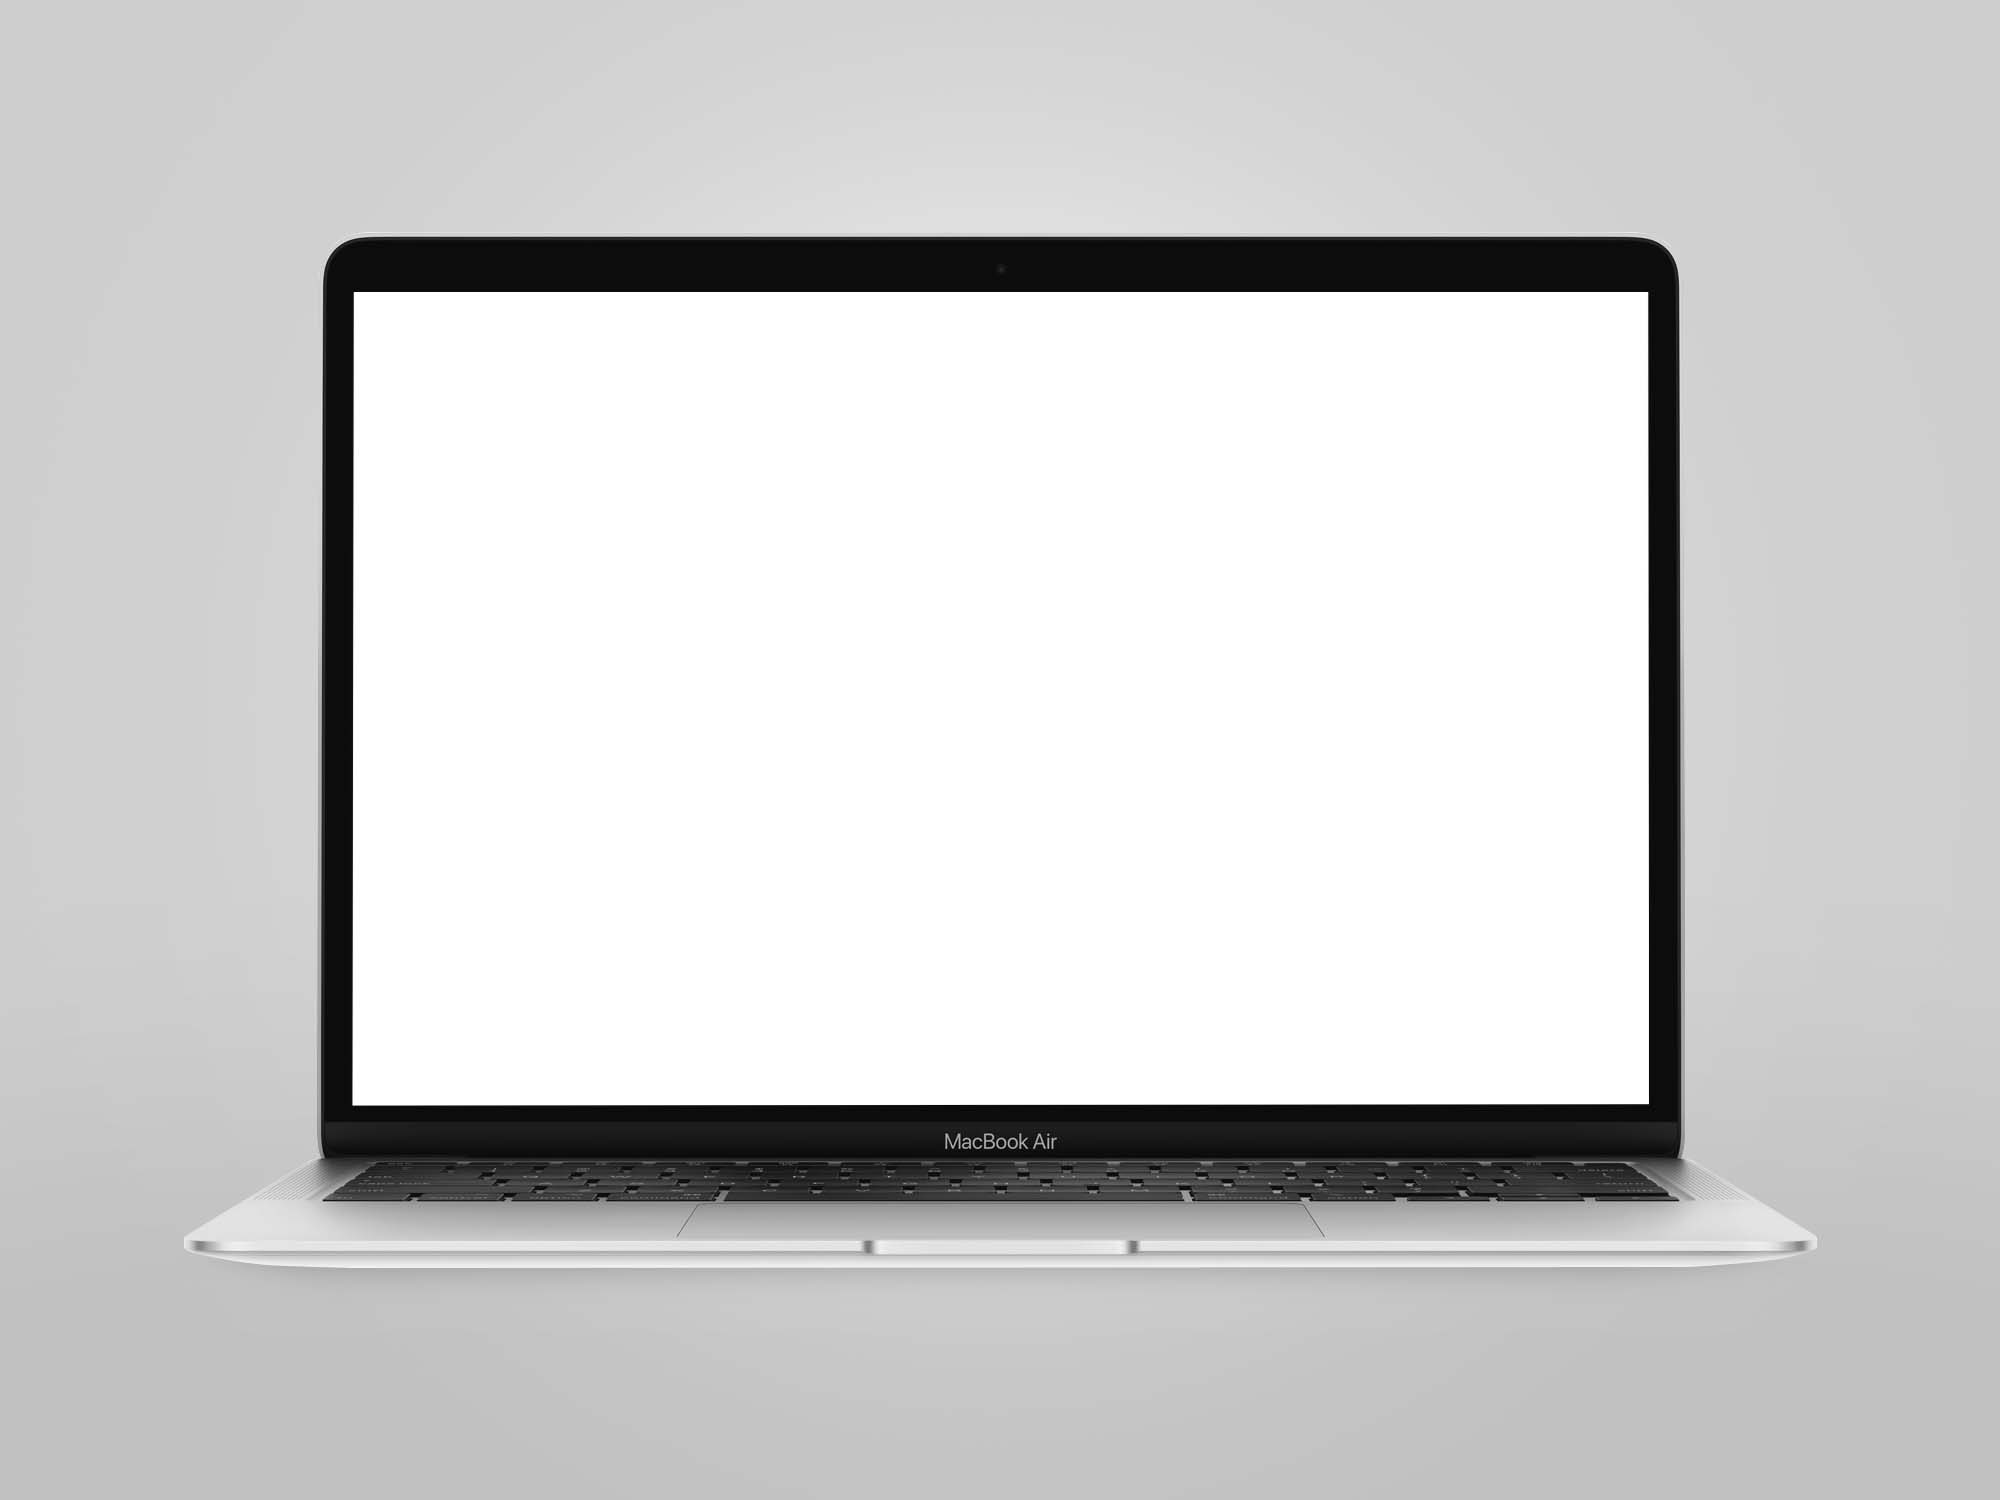 Harika Janice doğan  MacBook Air Mockup 2020 | PSD | Free Download | iMockups